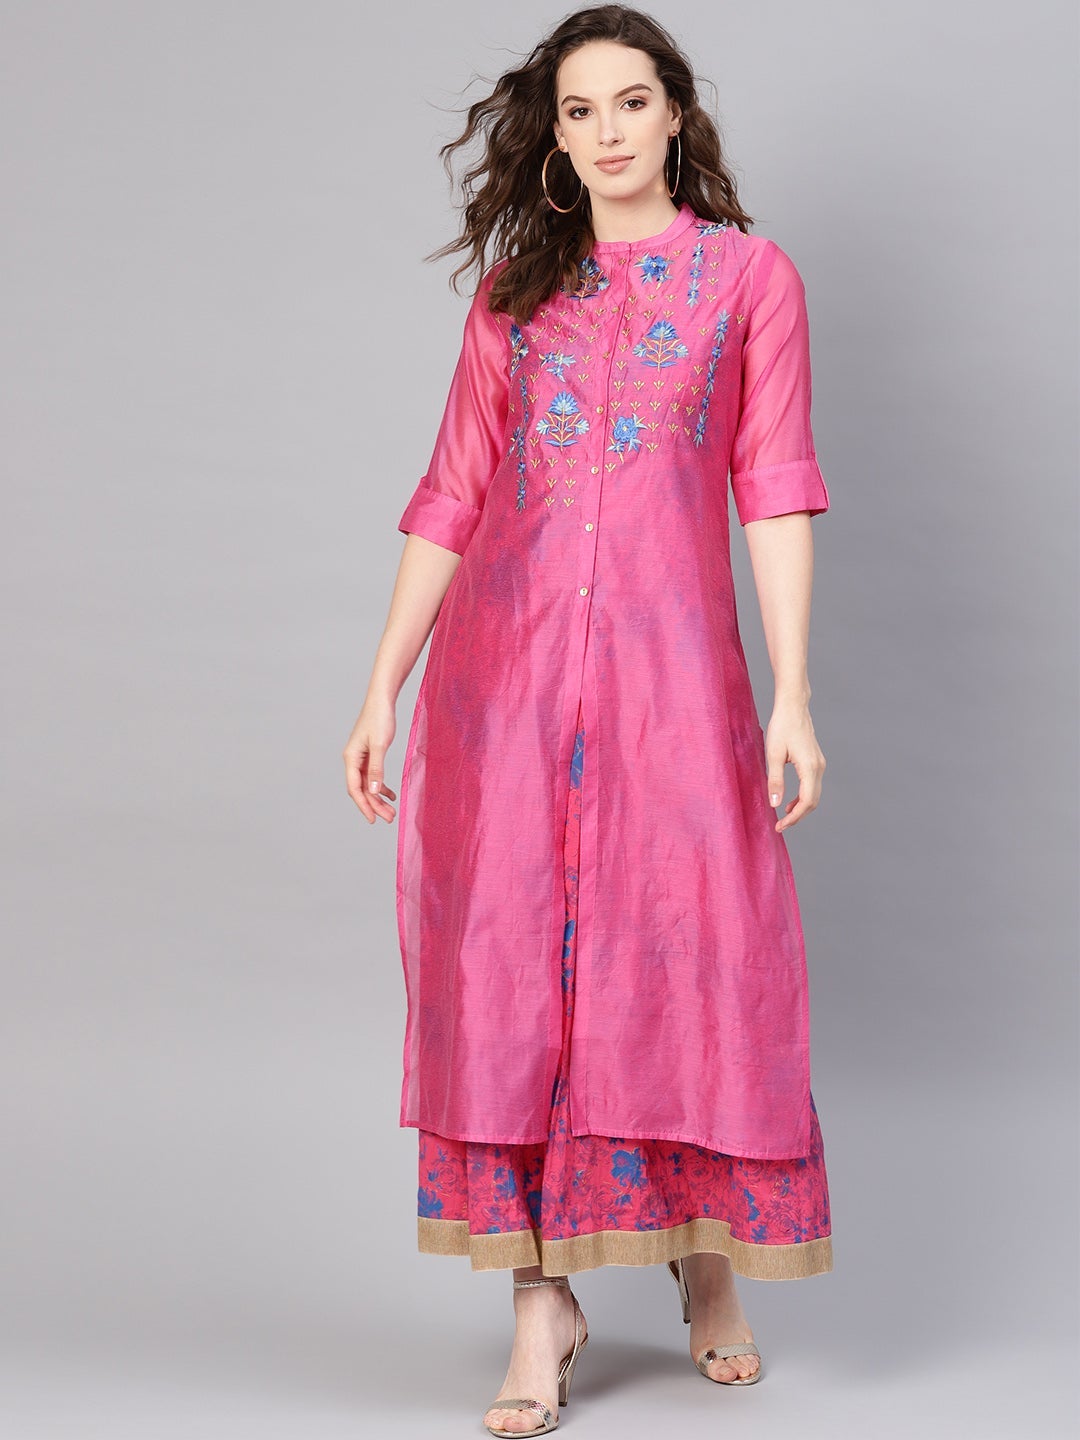 Juniper Fuchsia Chanderi Ethnic Motif Printed Layered Maxi Dress With Thread Work Embroidery